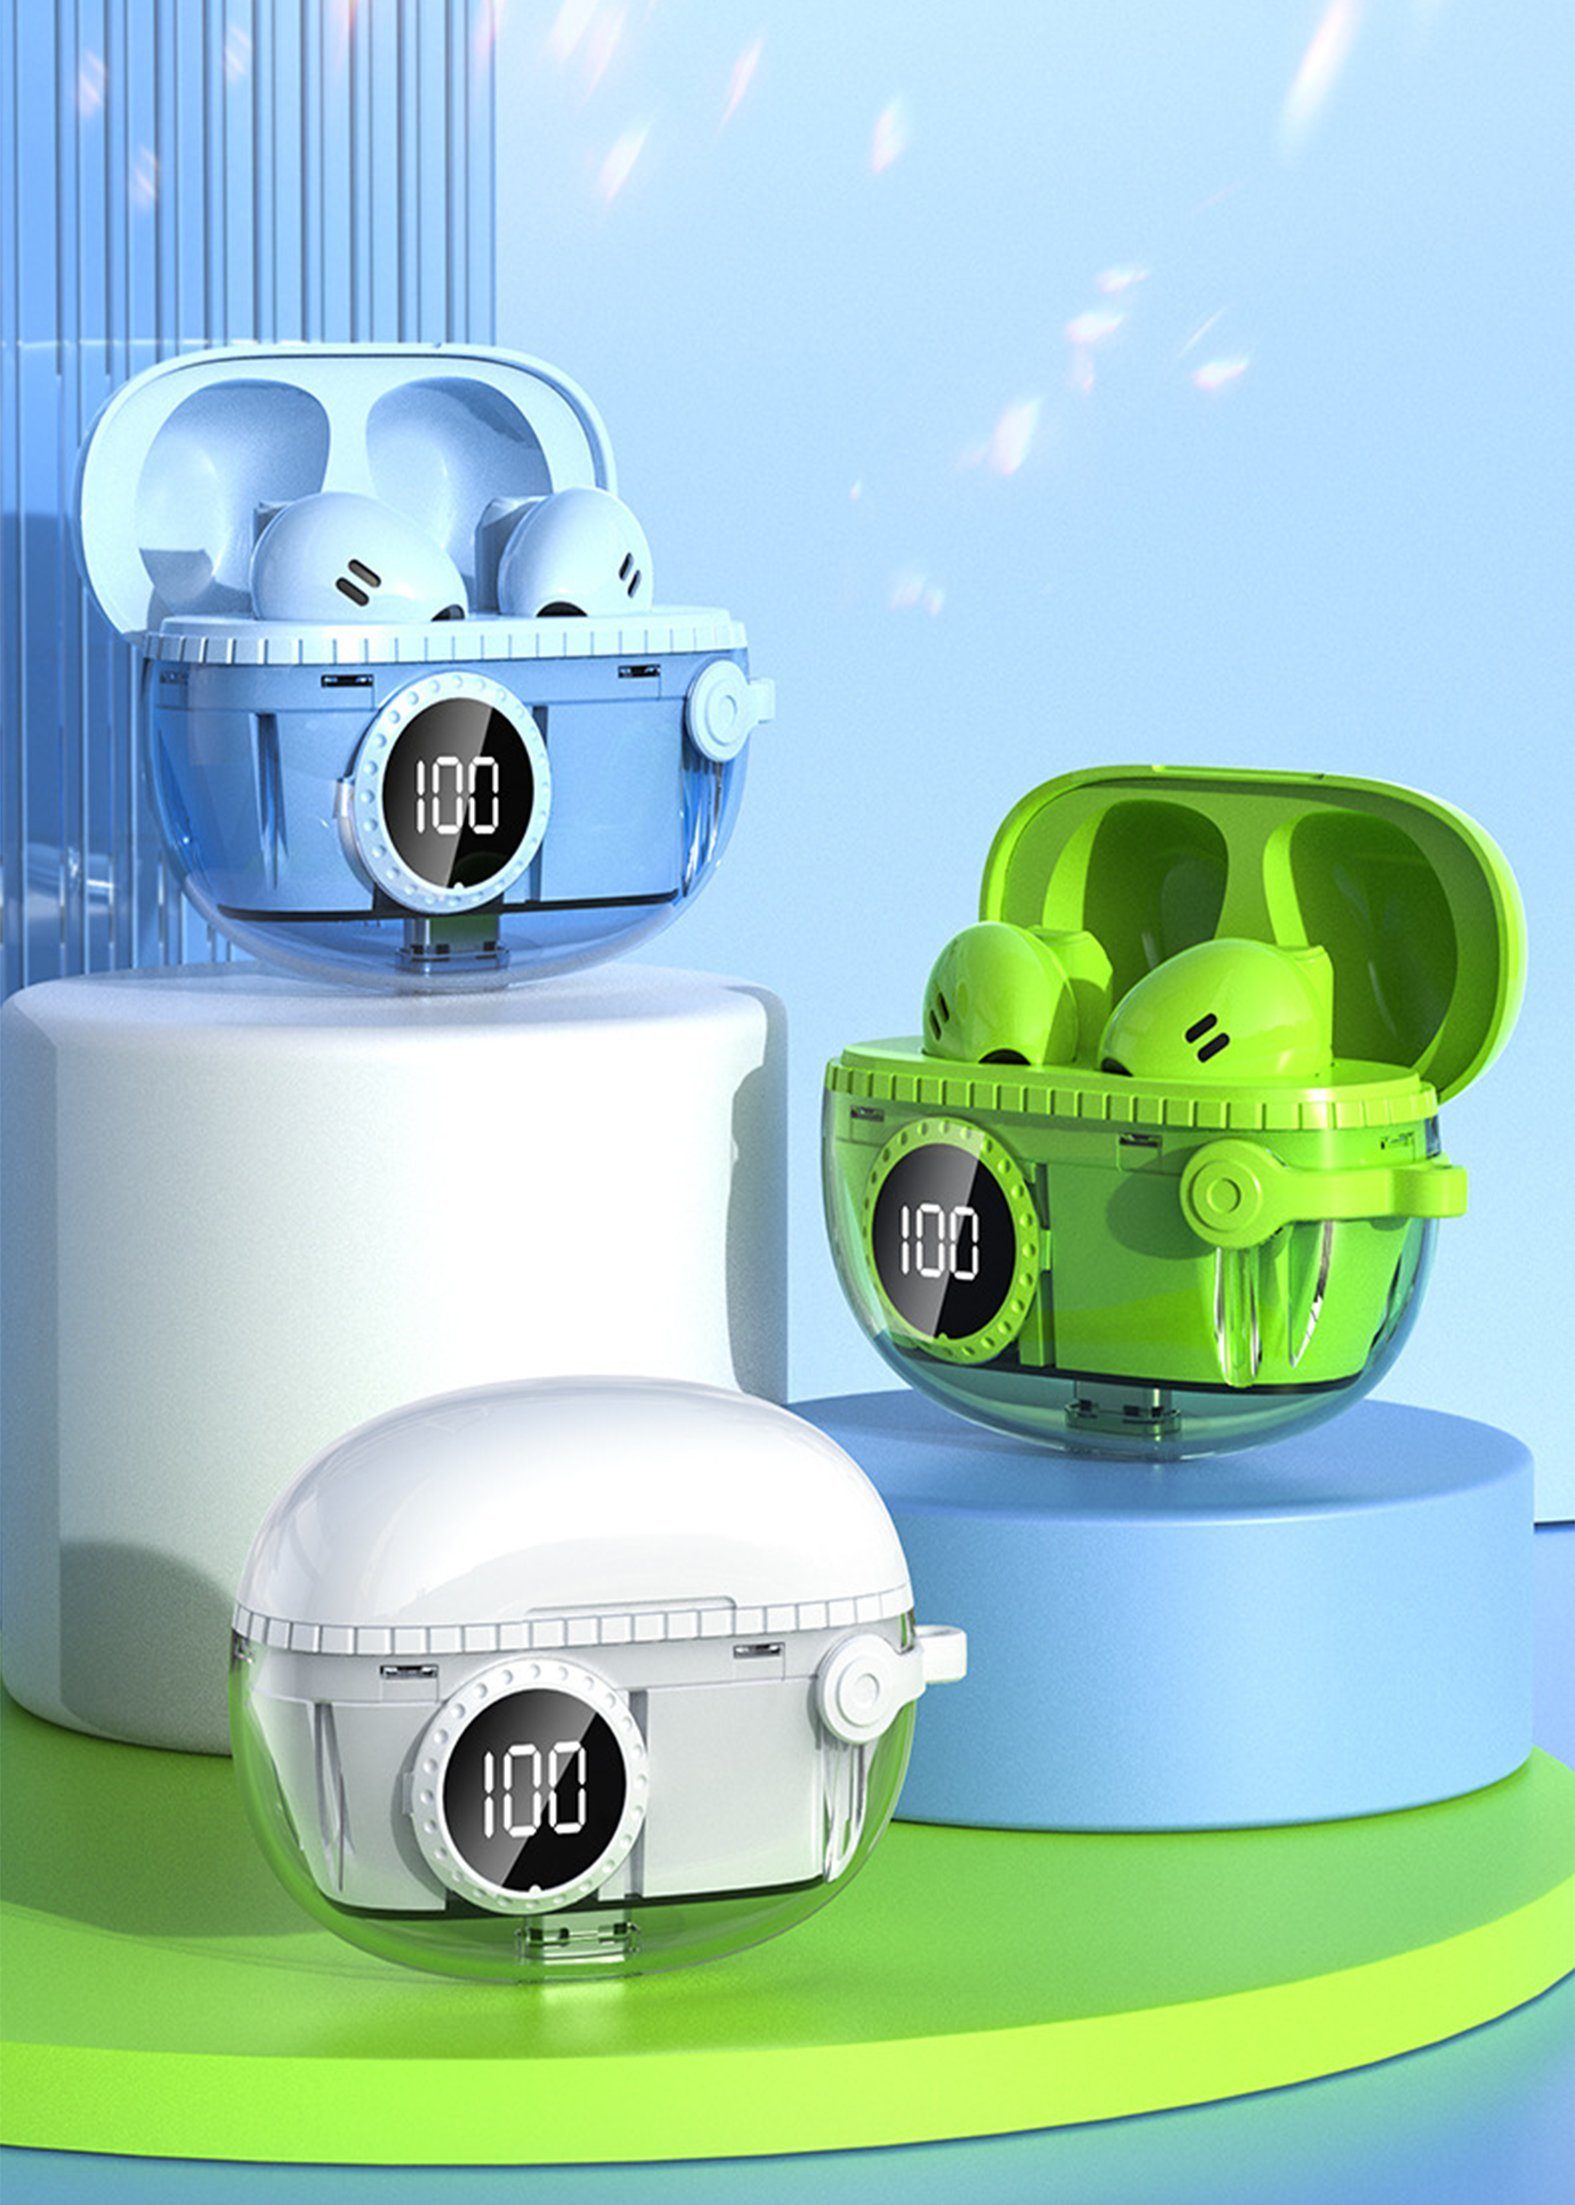 Diida Kopfhörer,In-Ear-Bluetooth-Kopfhörer mit Geräuschunterdrückung,Smart Funk-Kopfhörer blau